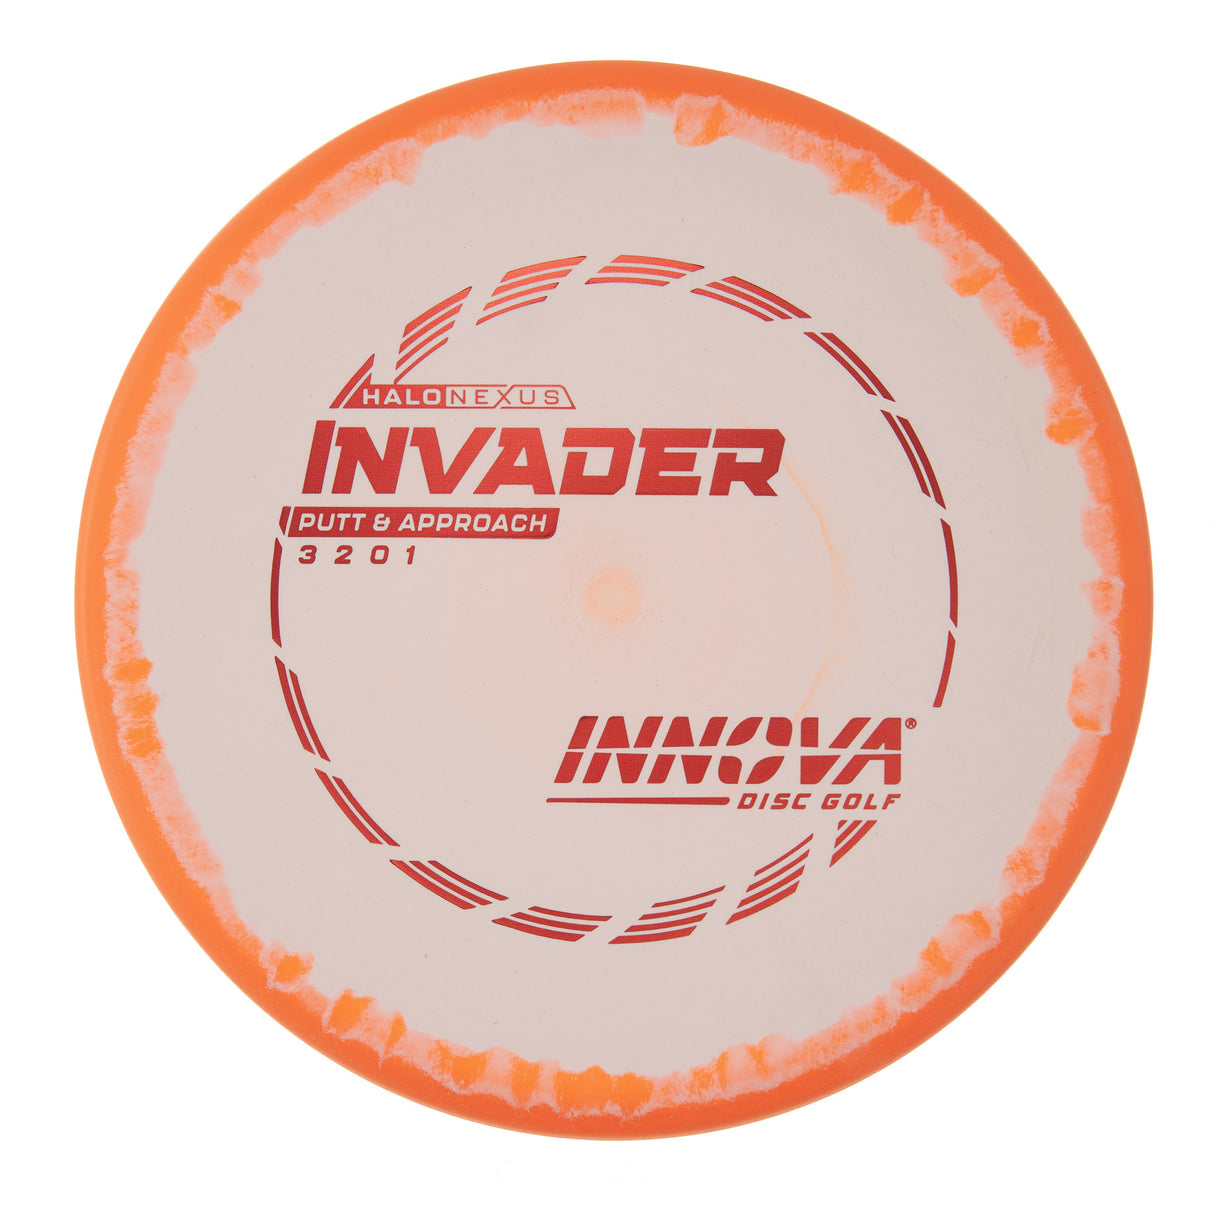 Innova Invader - Halo Nexus 171g | Style 0003